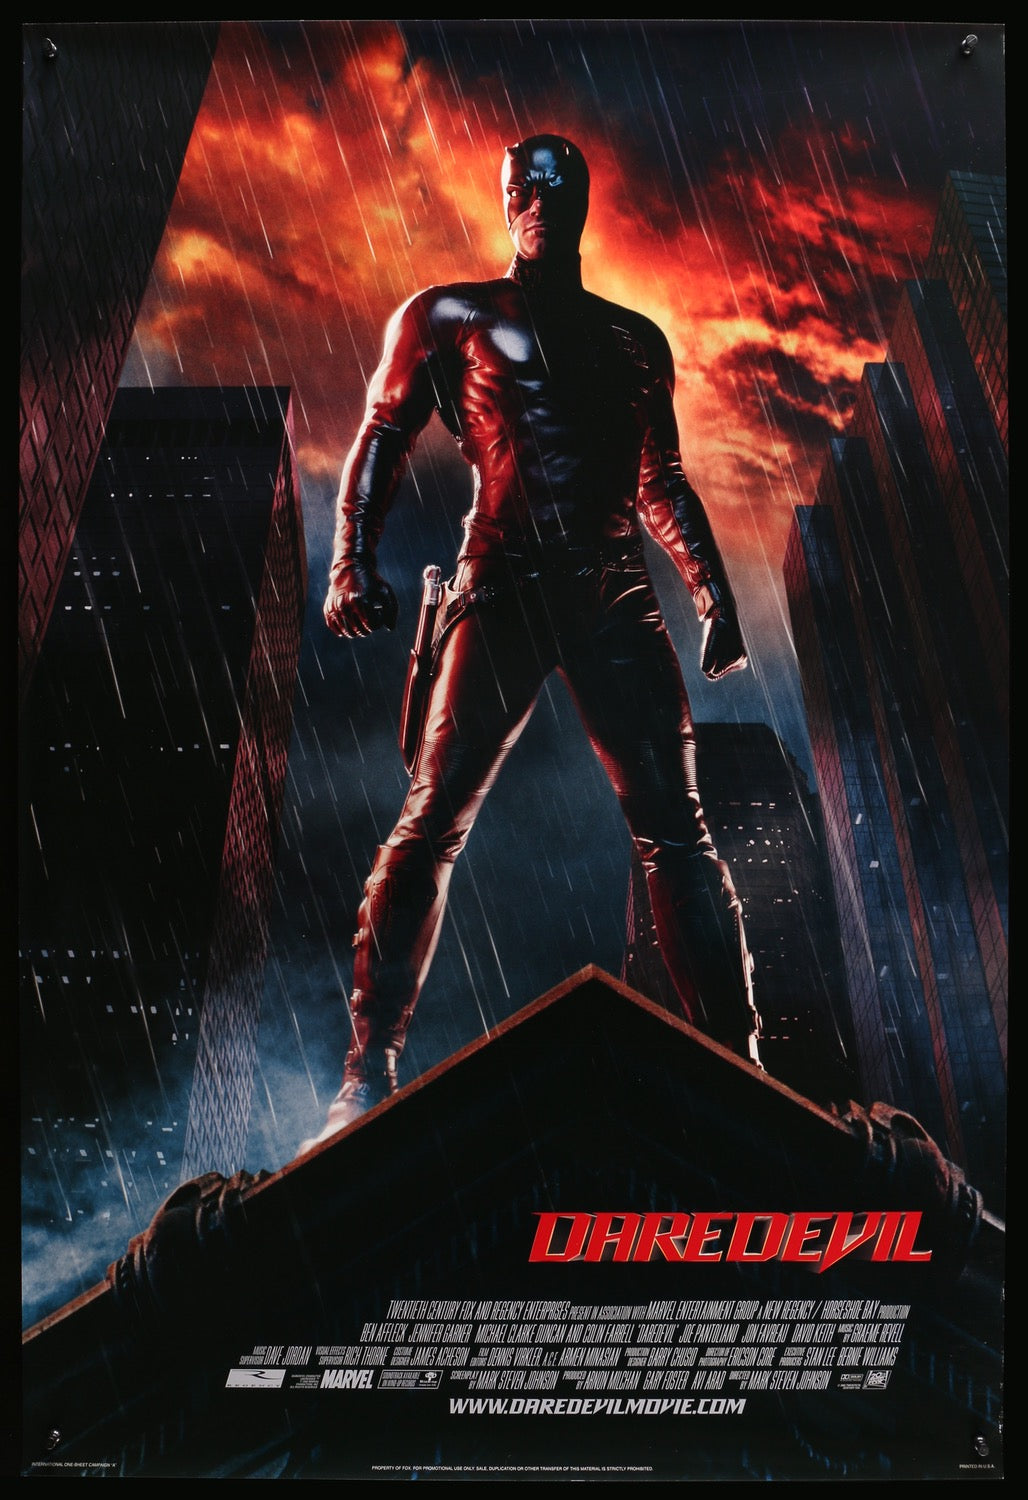 Daredevil (2003) original movie poster for sale at Original Film Art